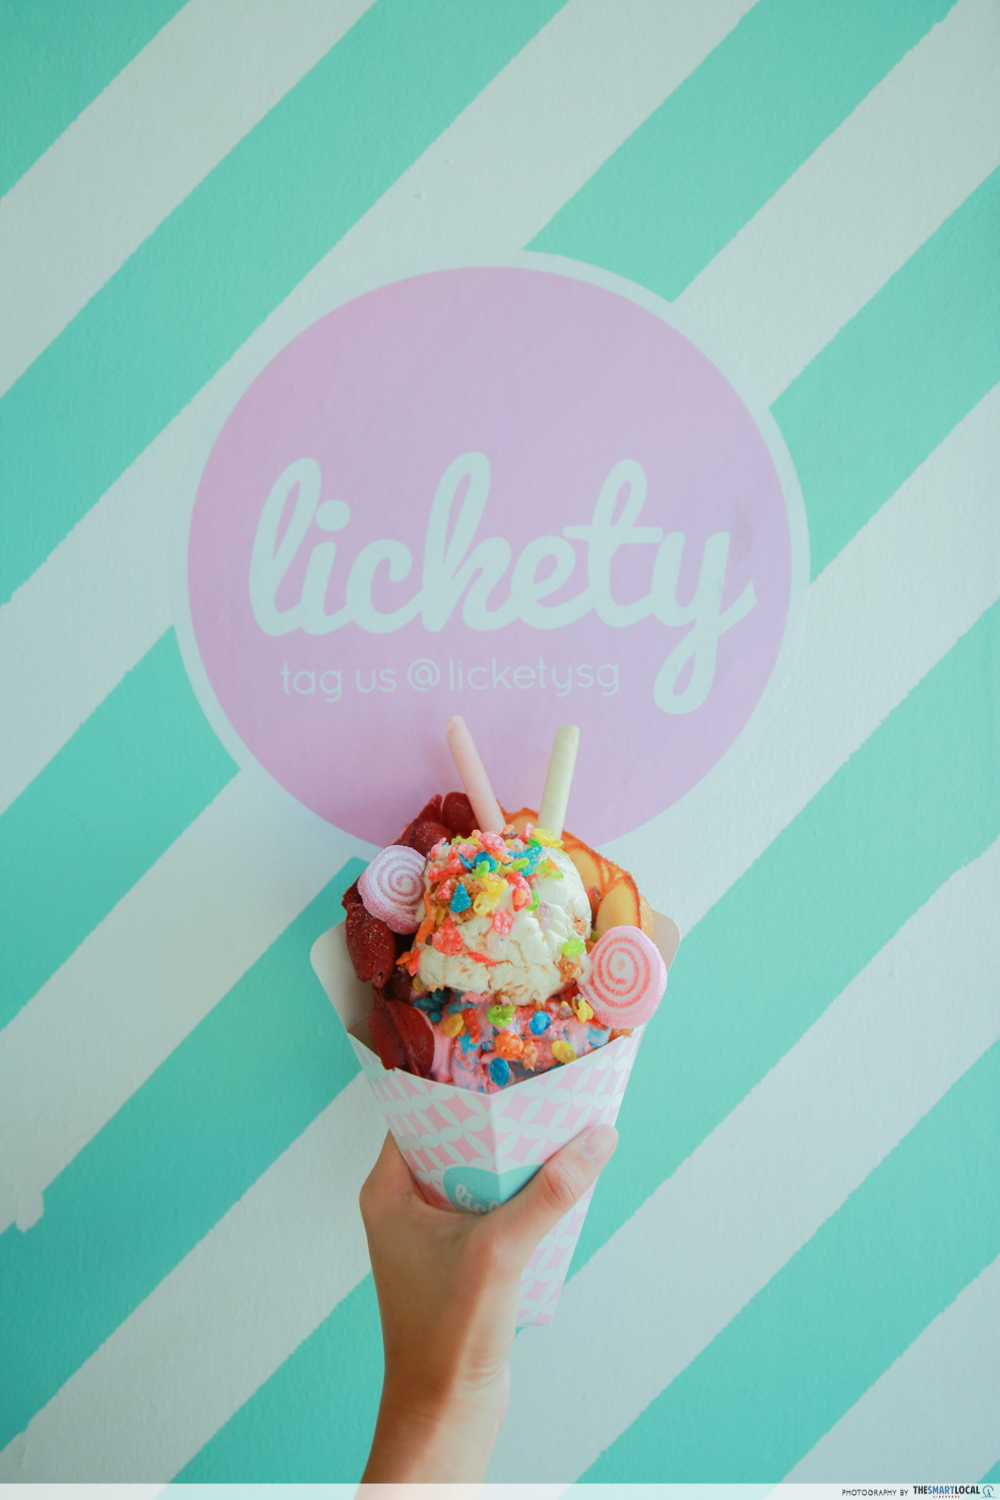 Lickety Cafe ice cream